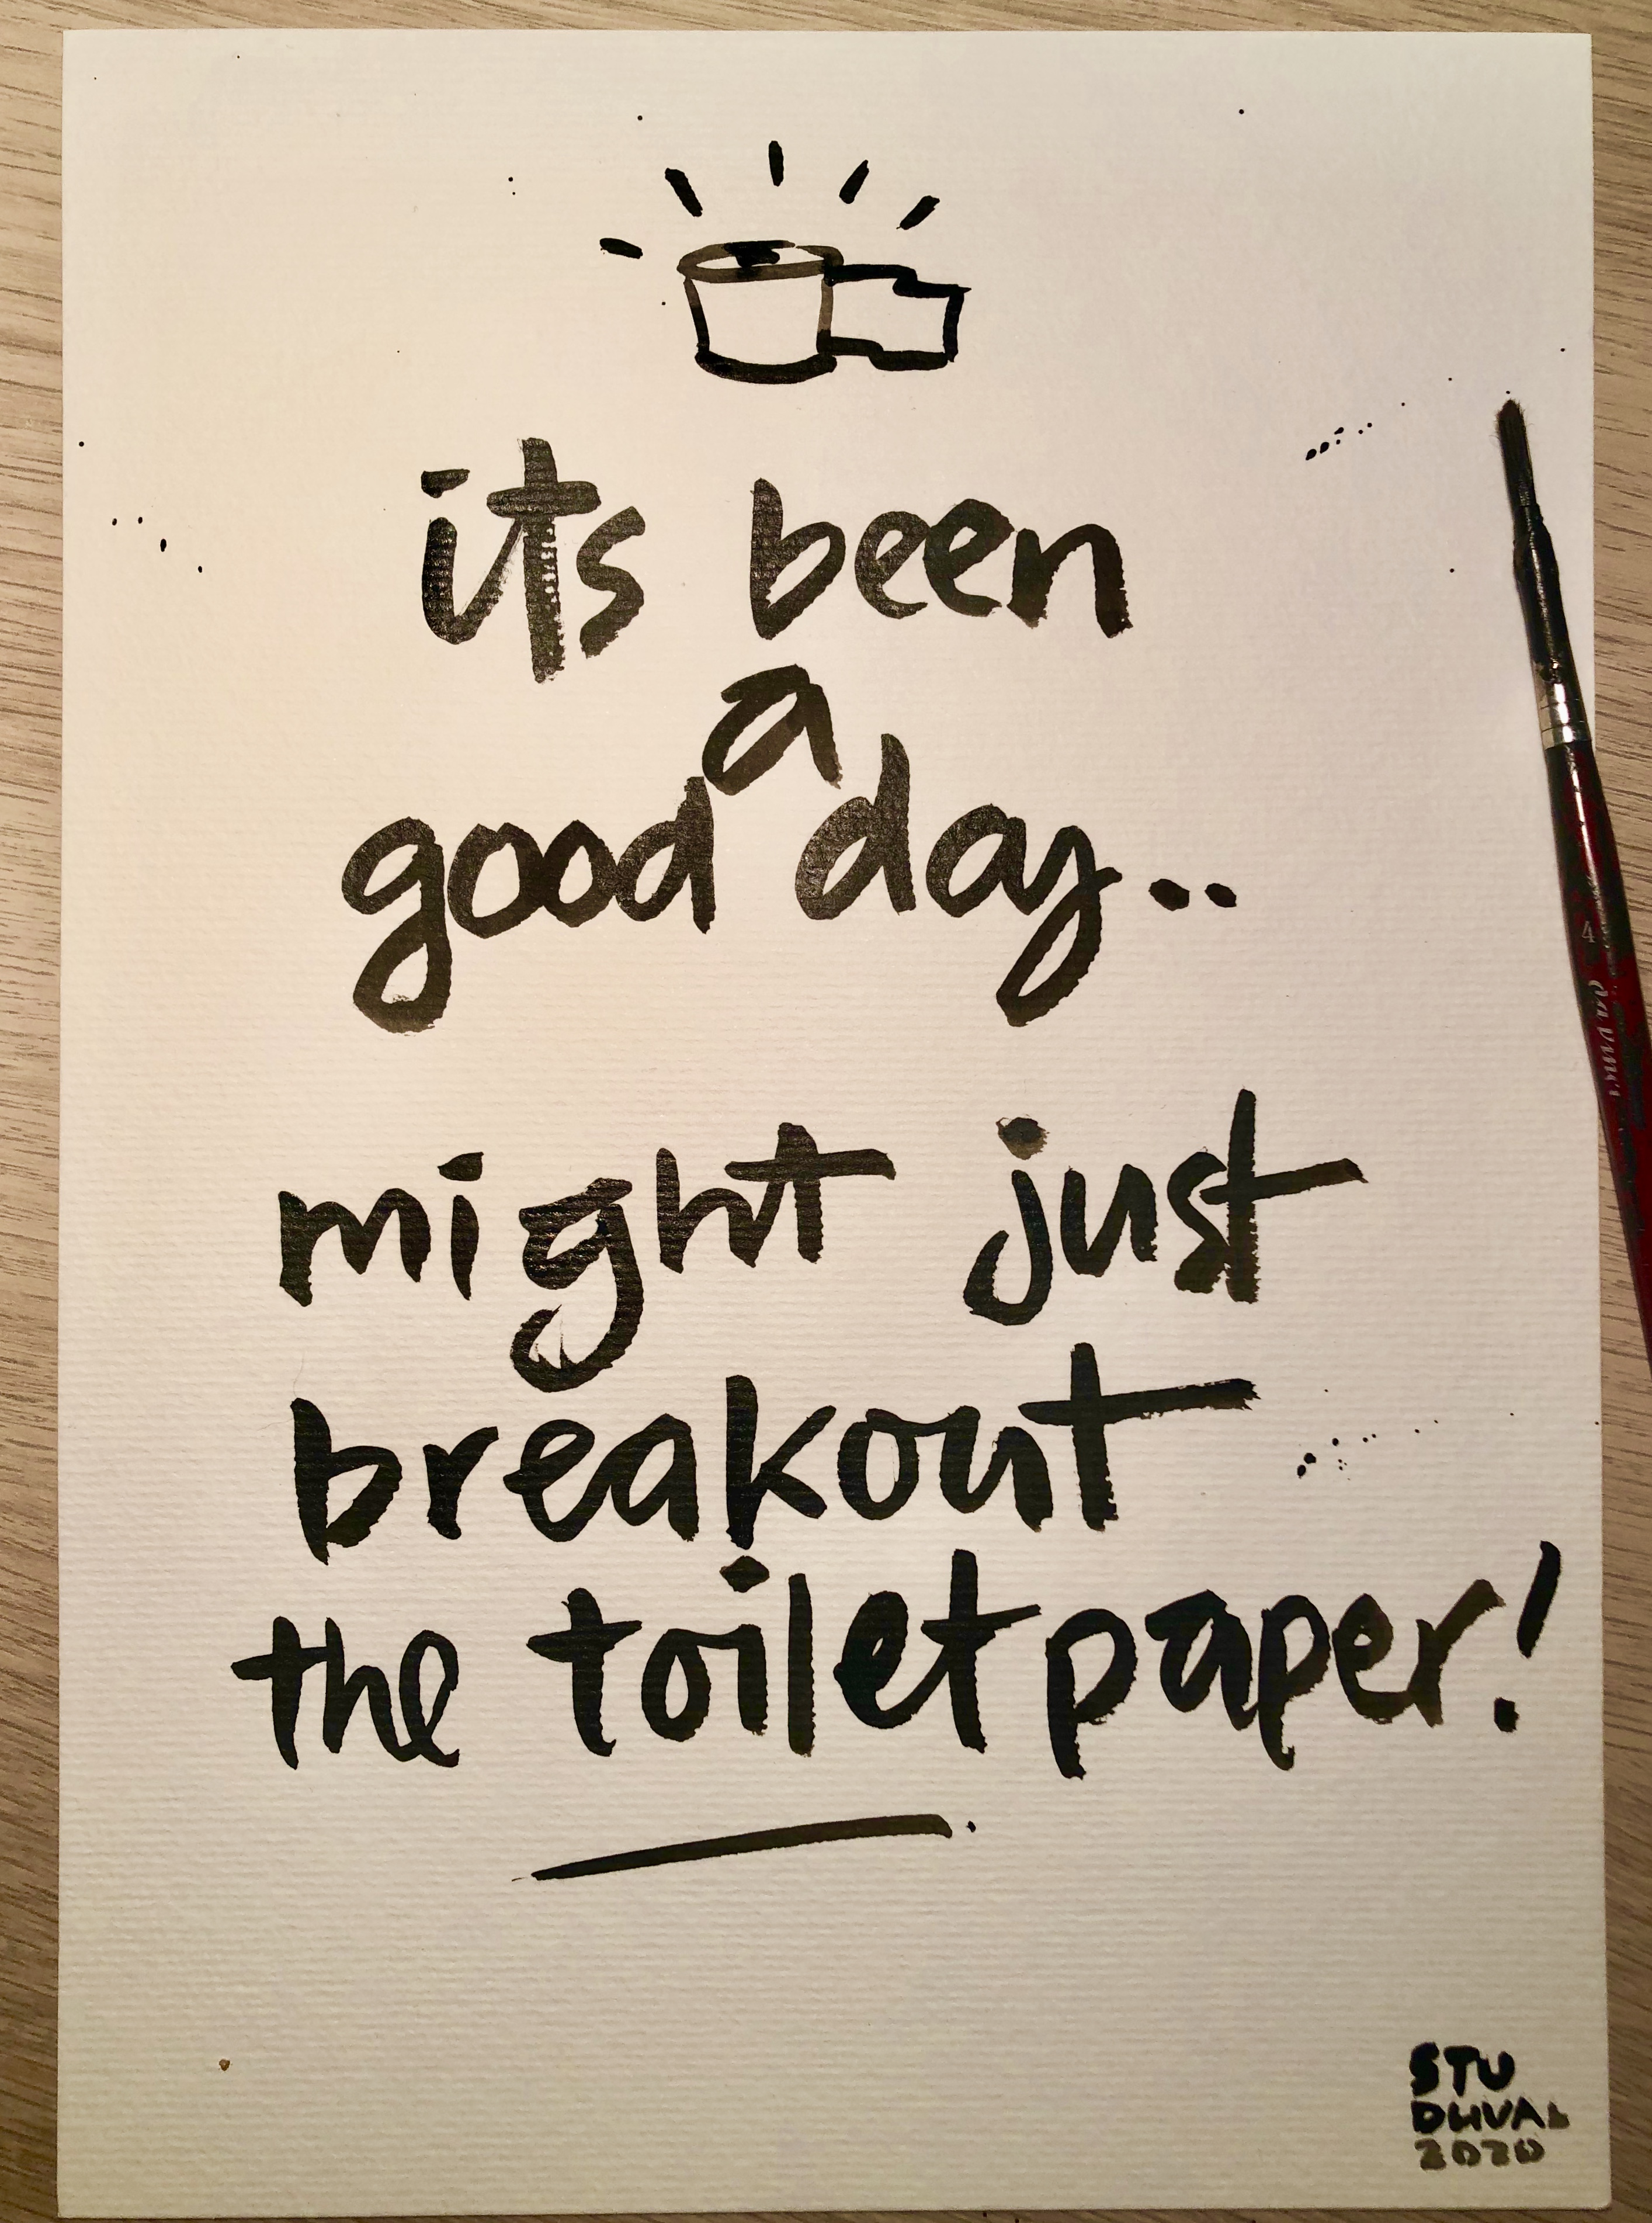 Breakout The Toilet Paper